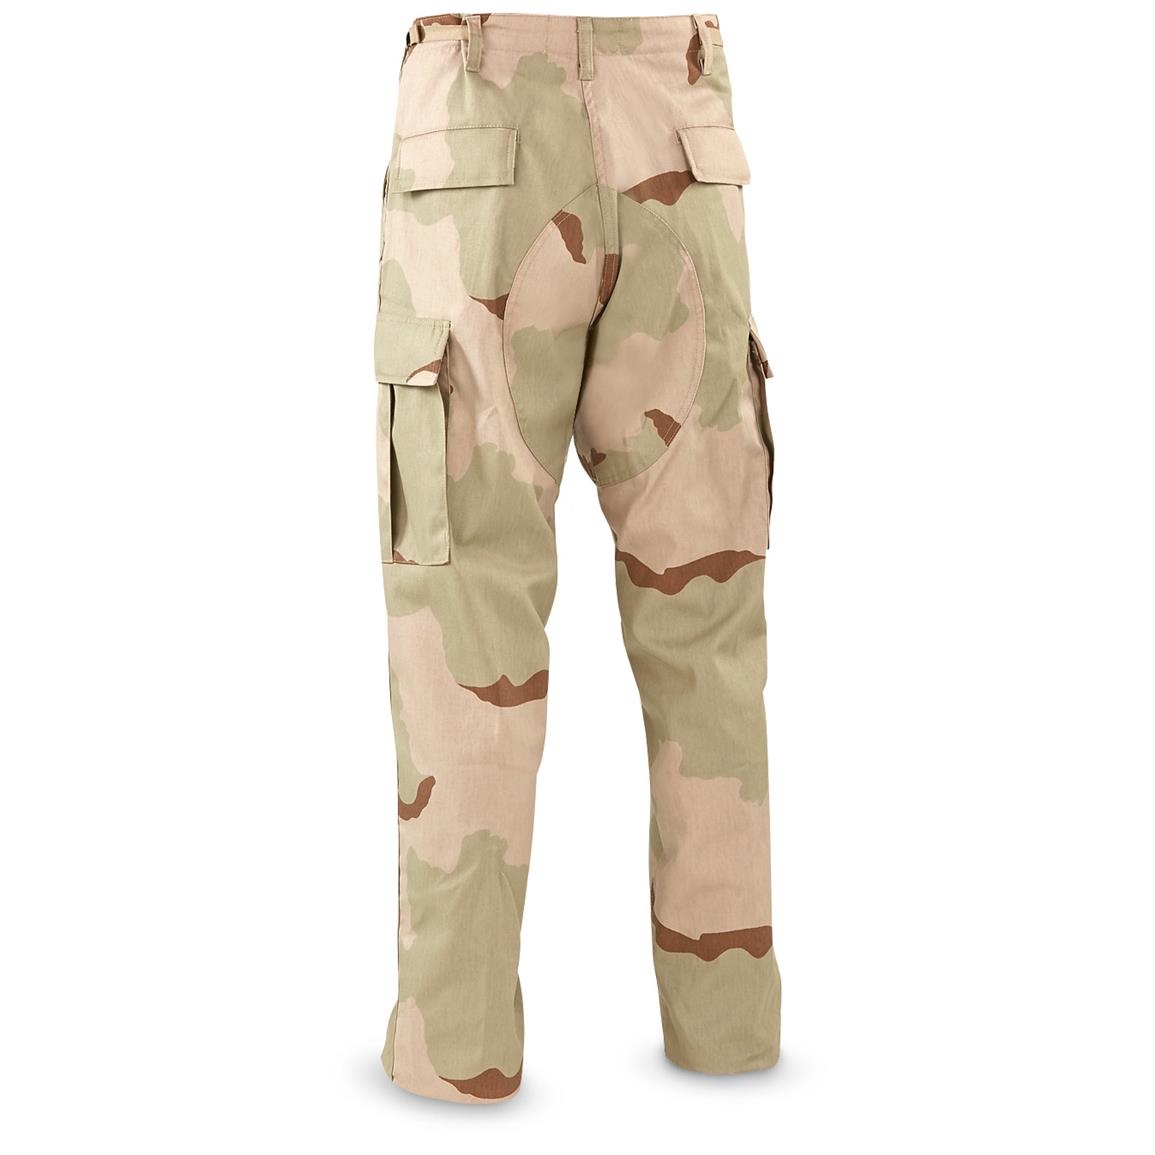 HQ ISSUE Men's BDU Pants, 3 Color Desert Camo - 648195, Tactical ...